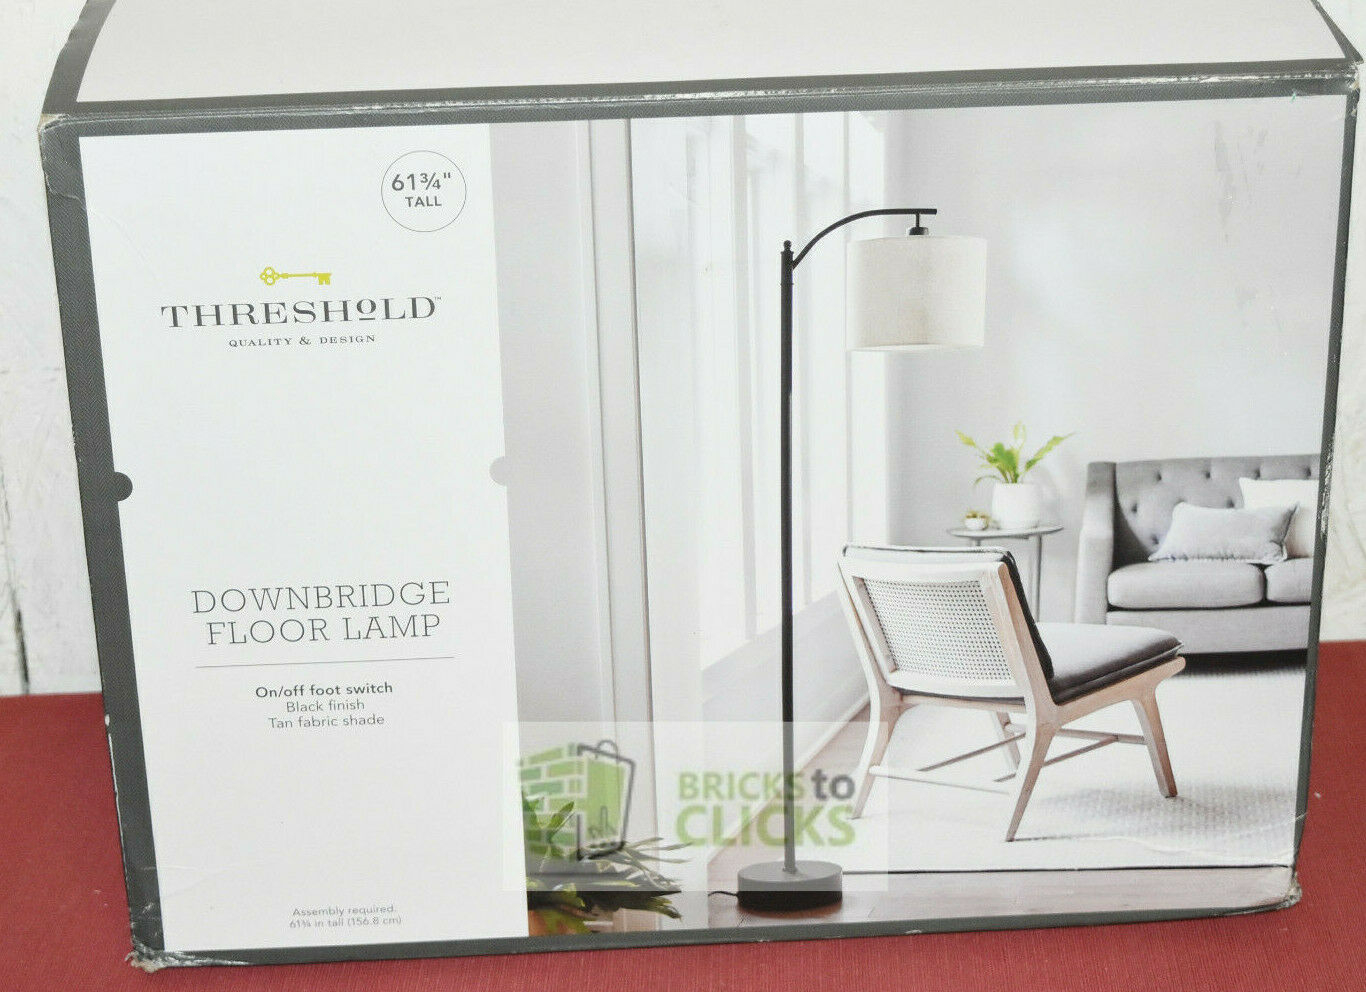 Threshold Downbridge Floor Lamp 61 Tall Black Finish Tan Fabric Shade within dimensions 1366 X 992